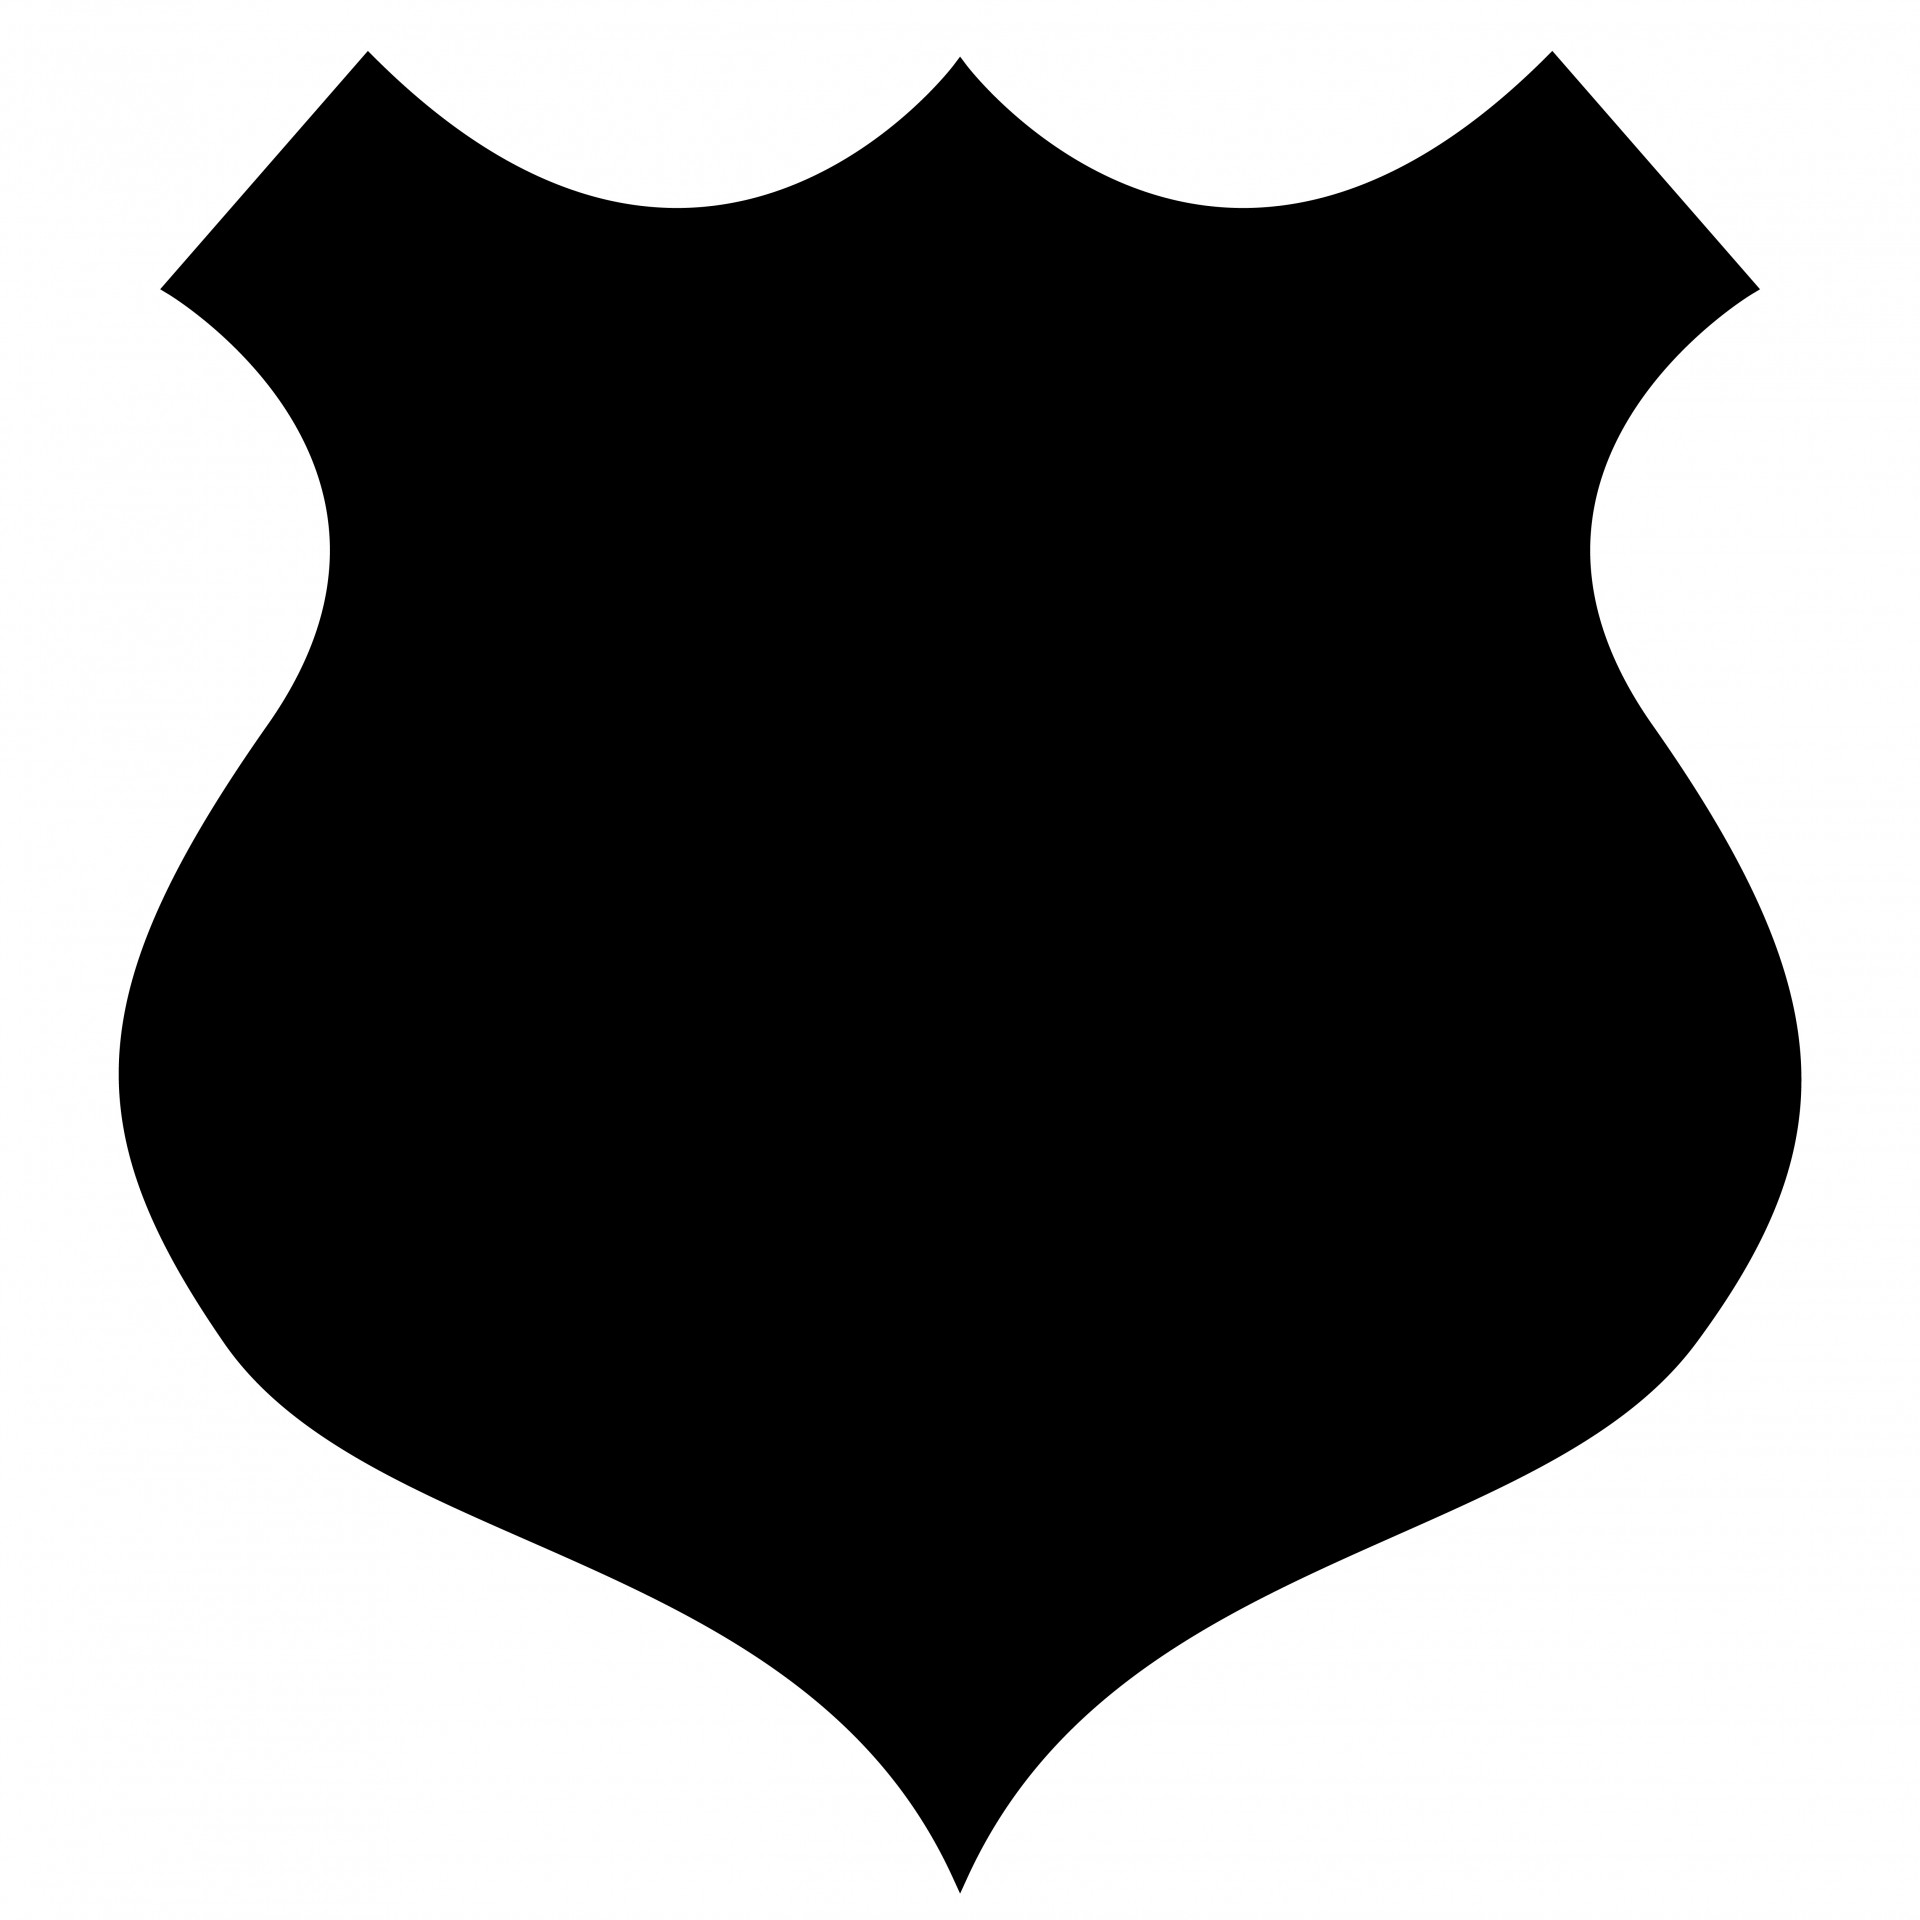 Badge Shield Black Shape Clipart Free Image From Needpix